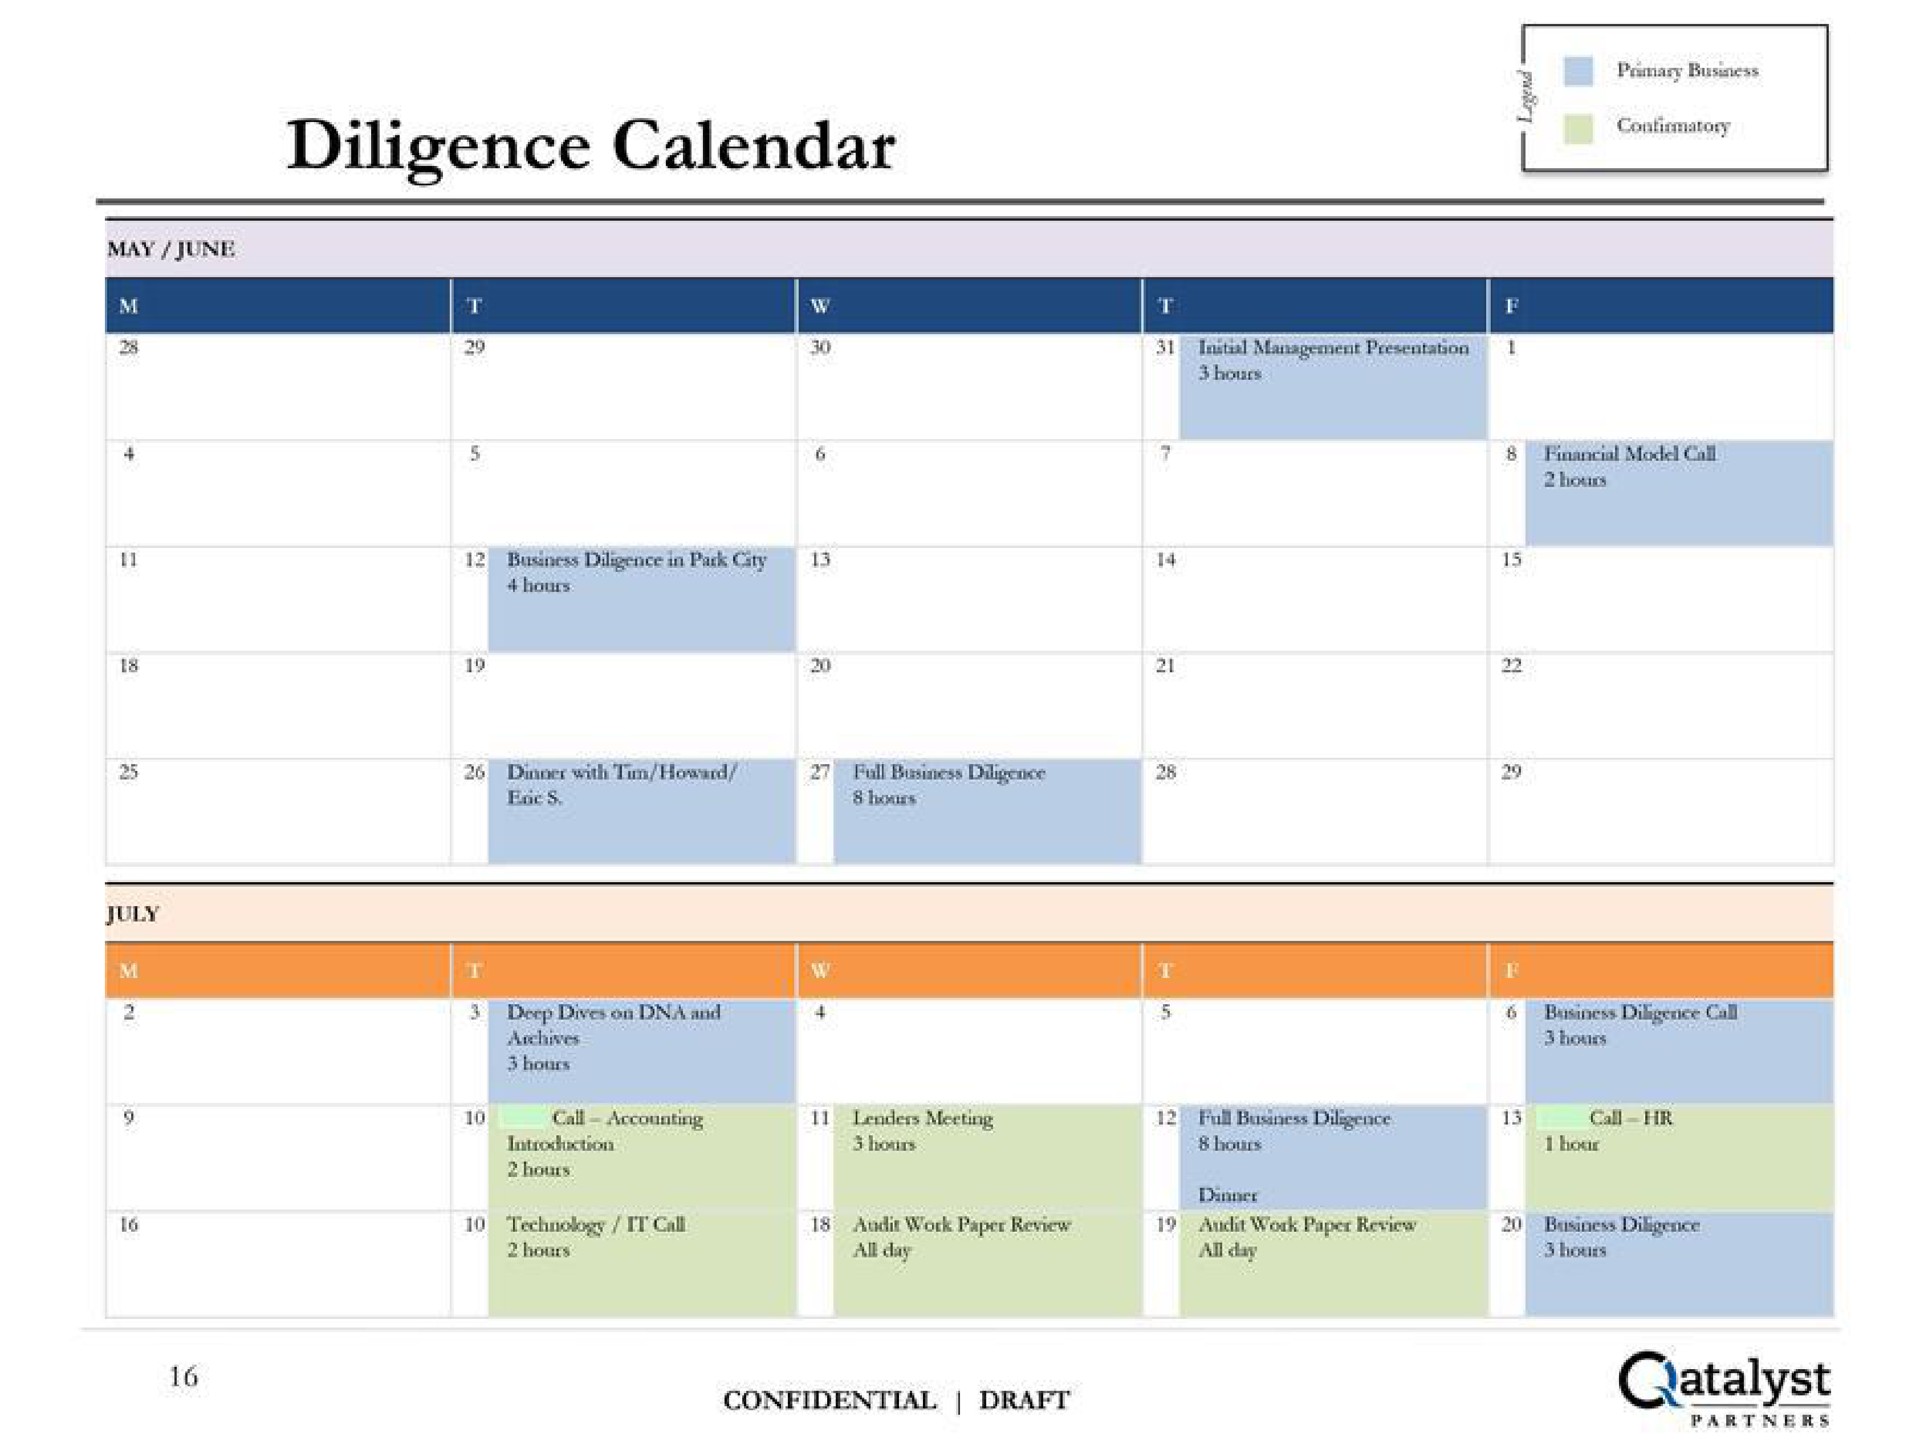 diligence calendar catalyst | Qatalyst Partners